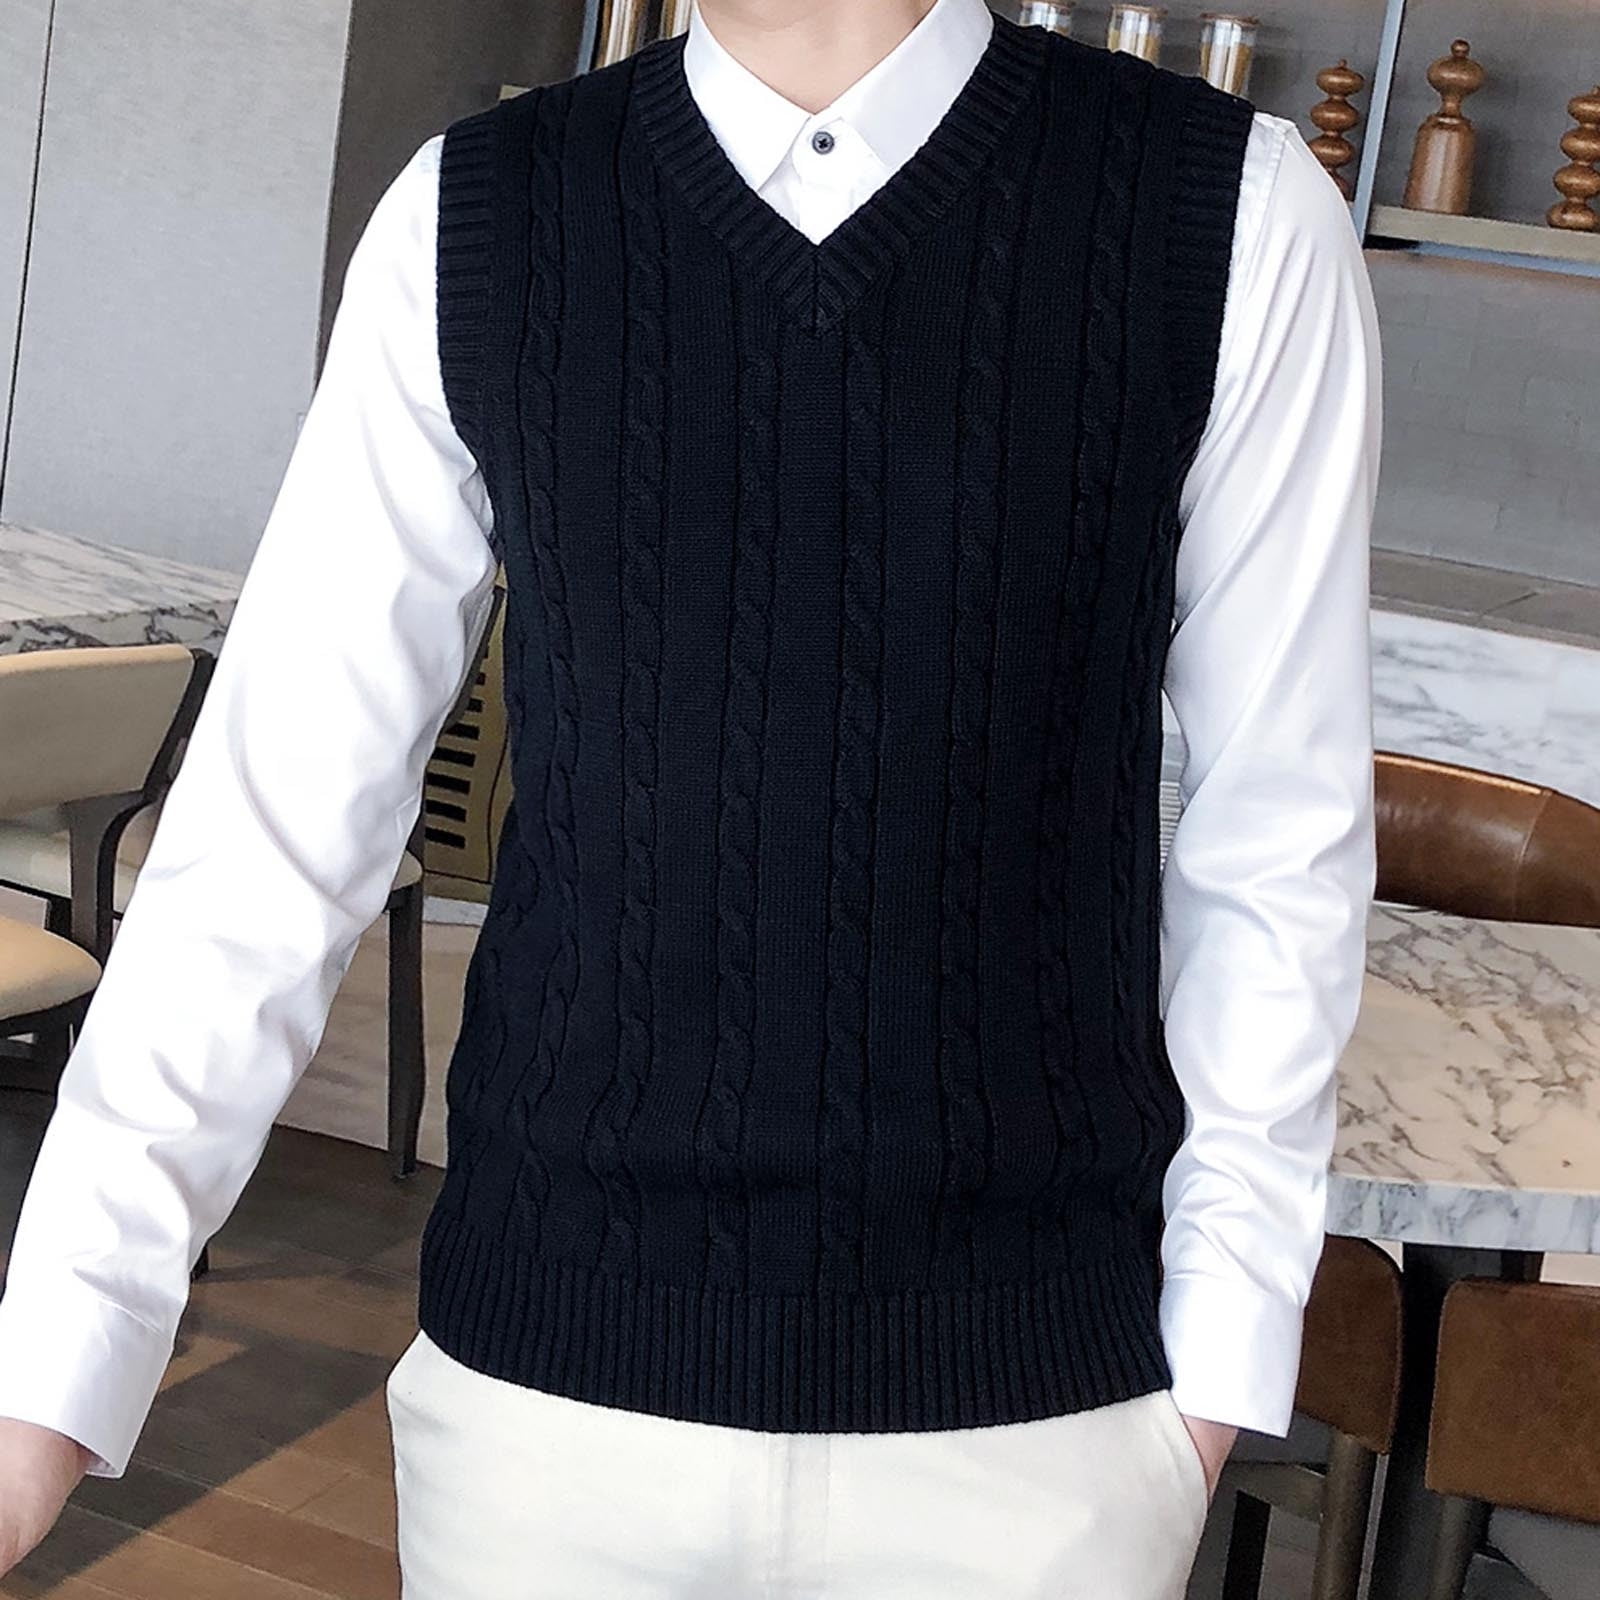 Jacquardknit sweater vest  BlackChecked  Ladies  HM SG